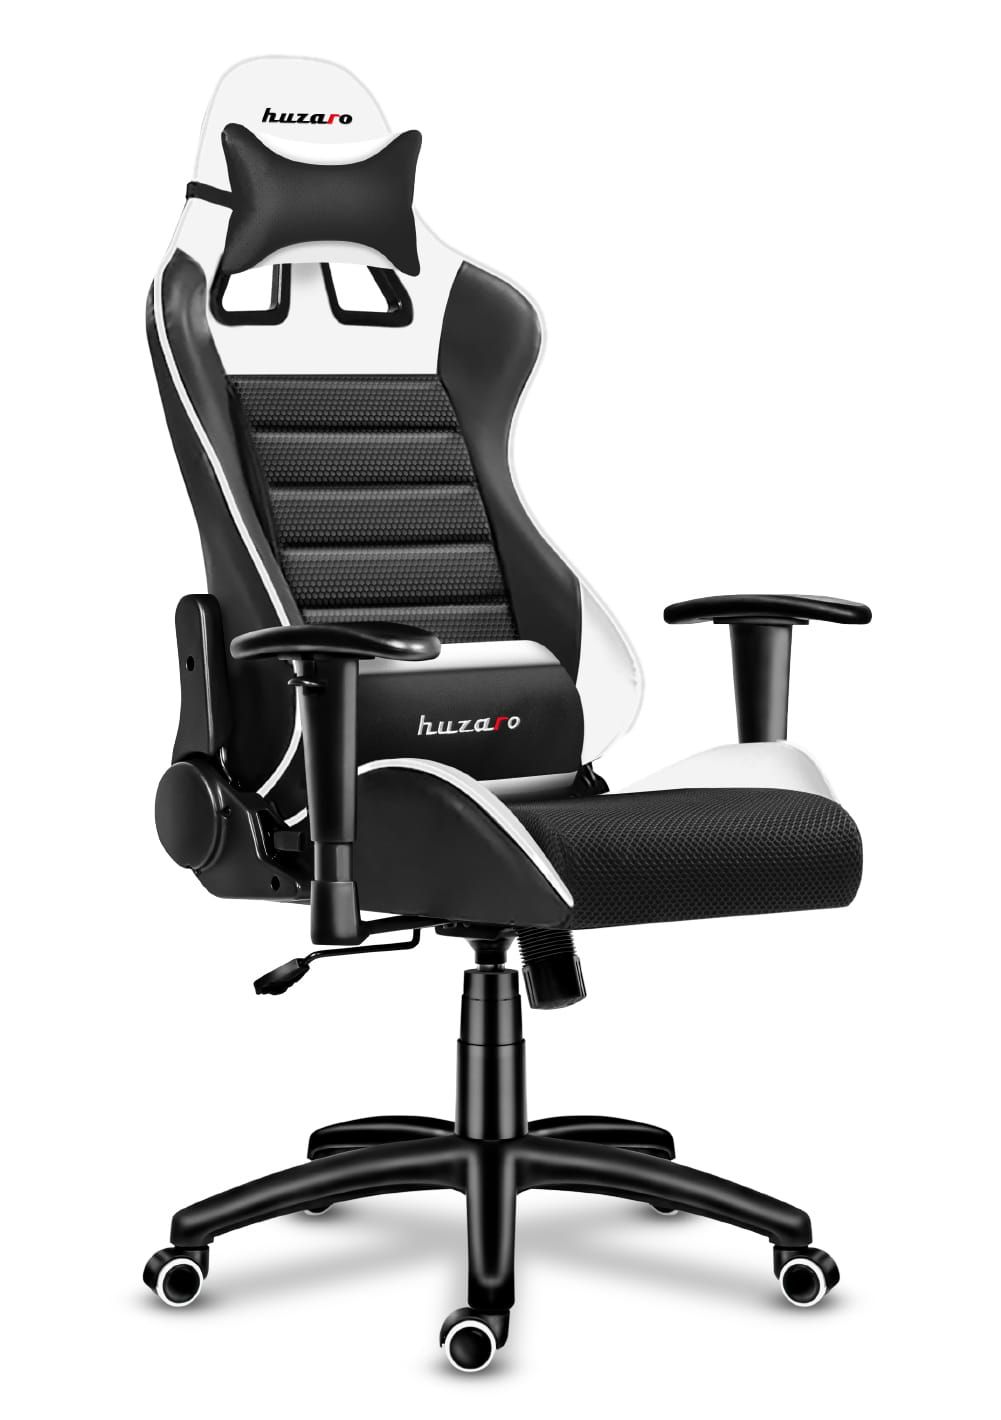 Huzaro Force 6.0 Universal gaming chair Mesh seat Black, White_1